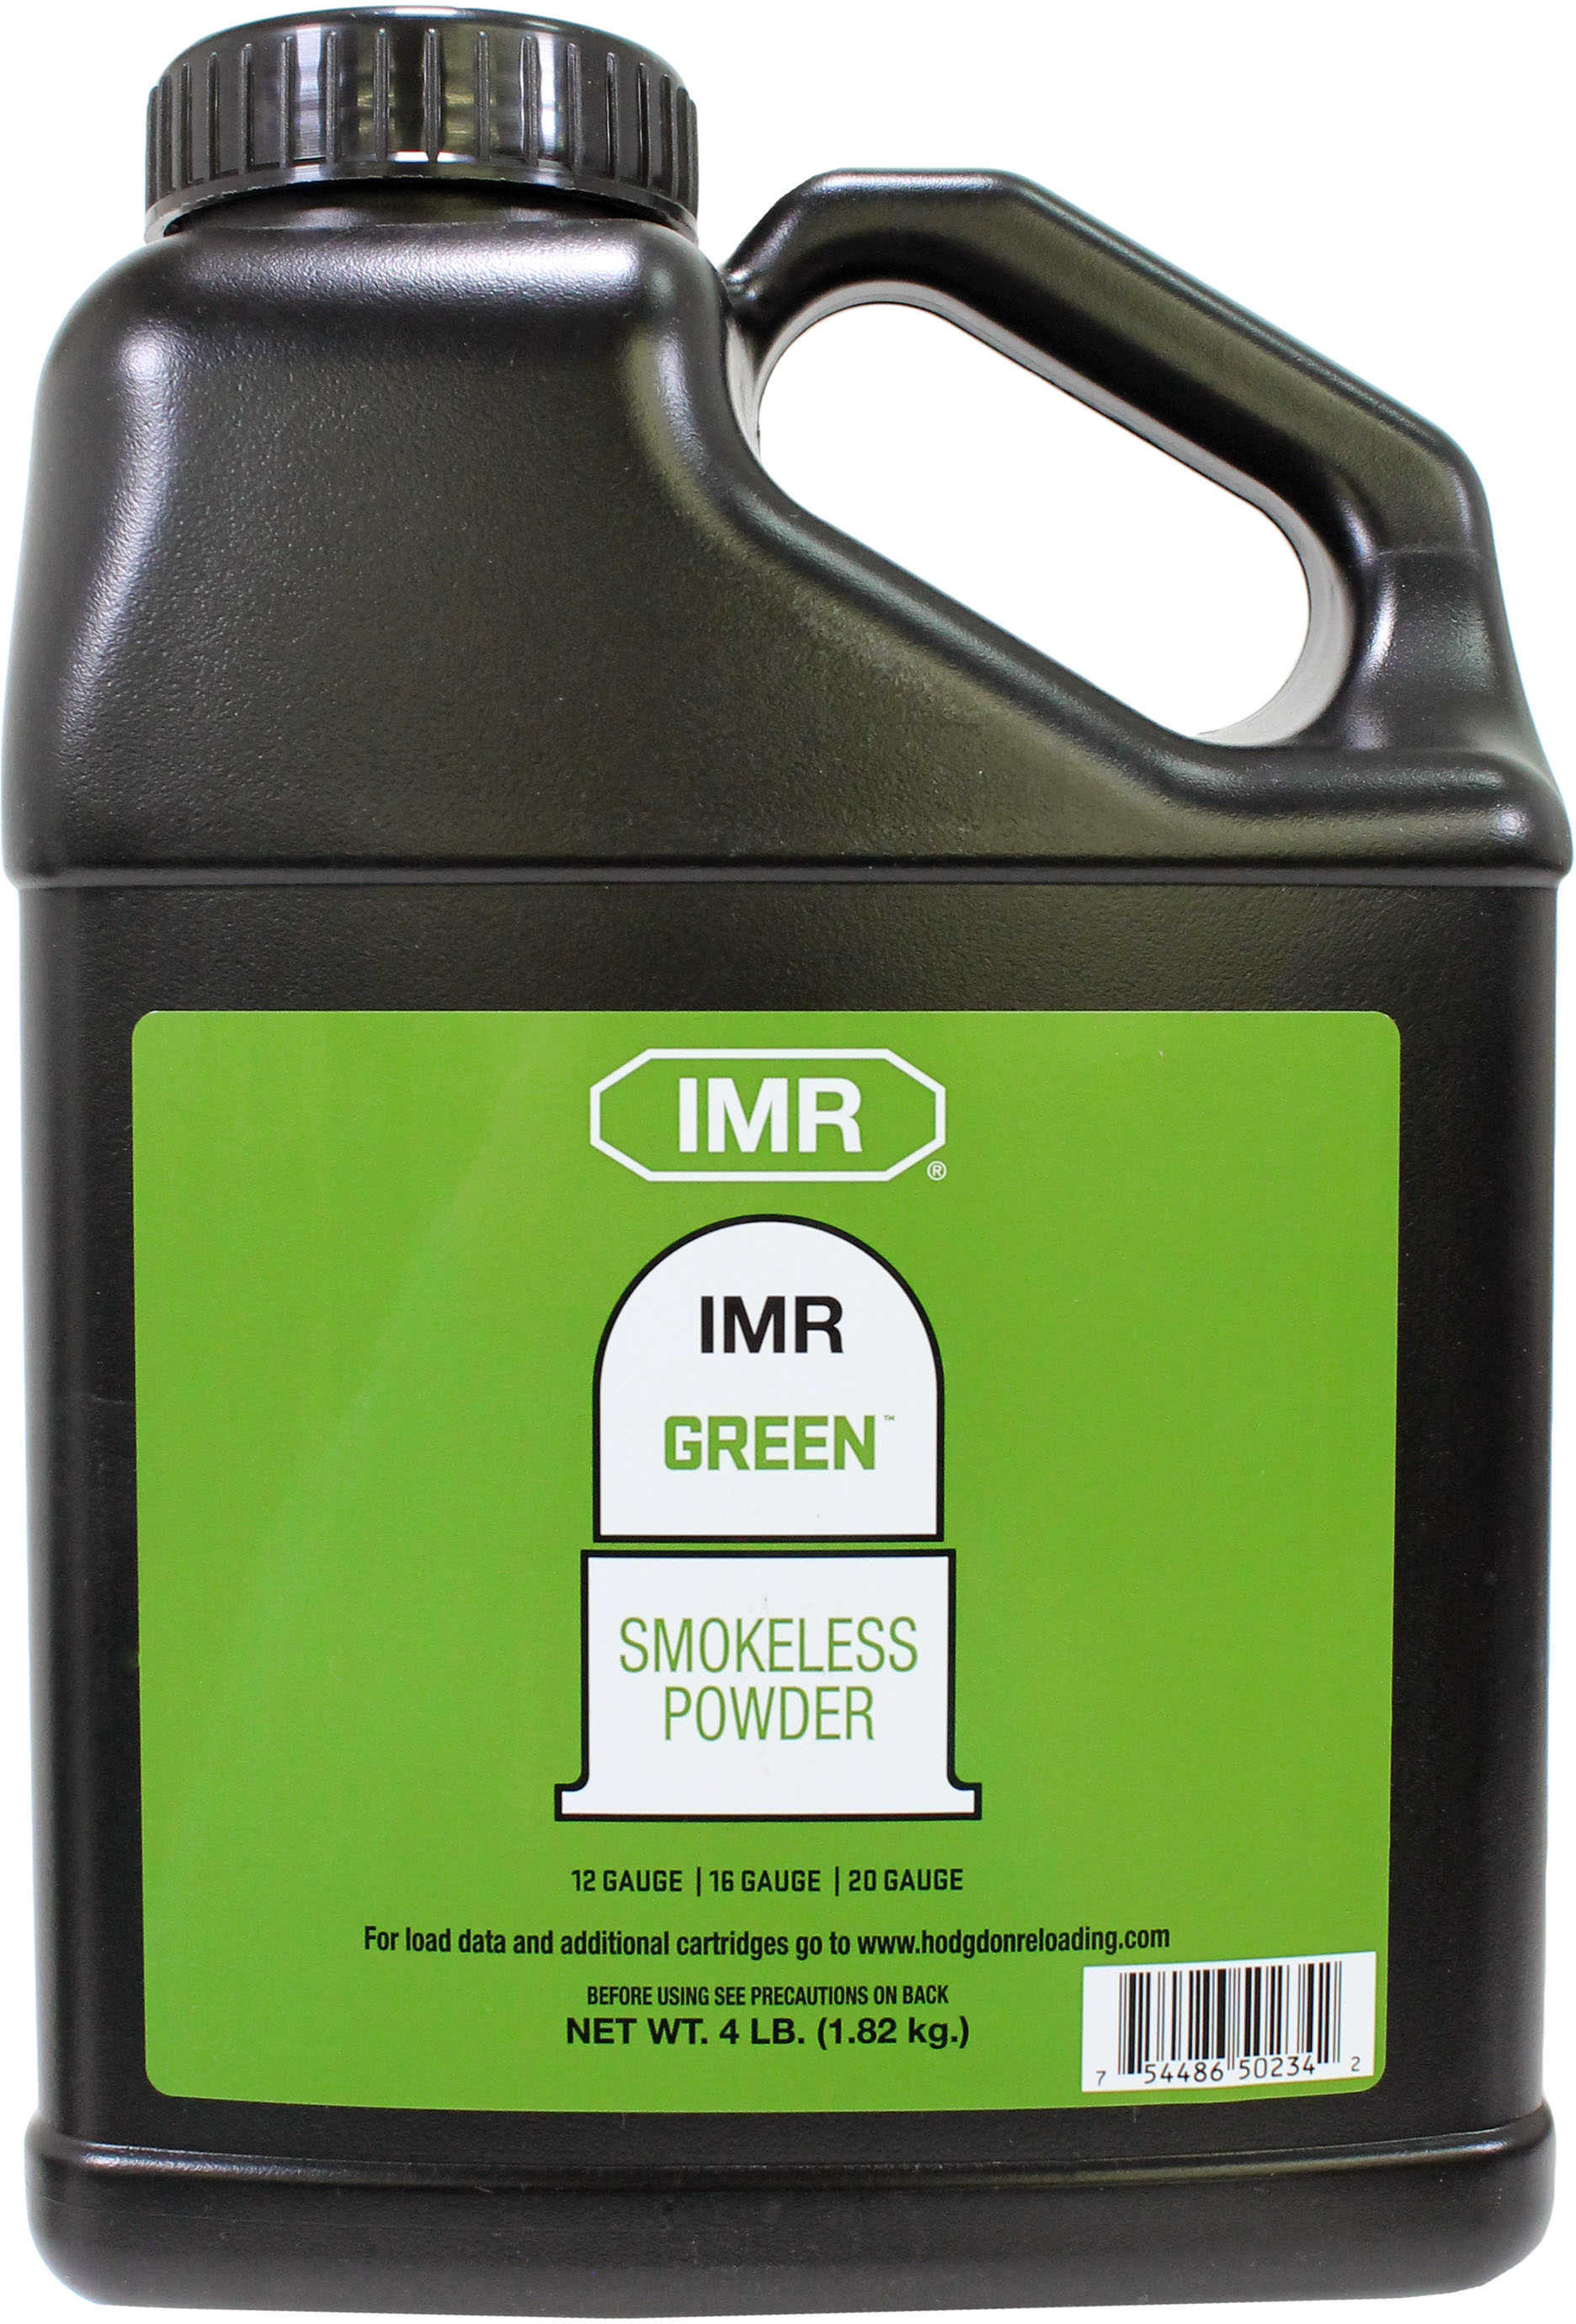 IMR Smokeless Powder Green 4 Lb